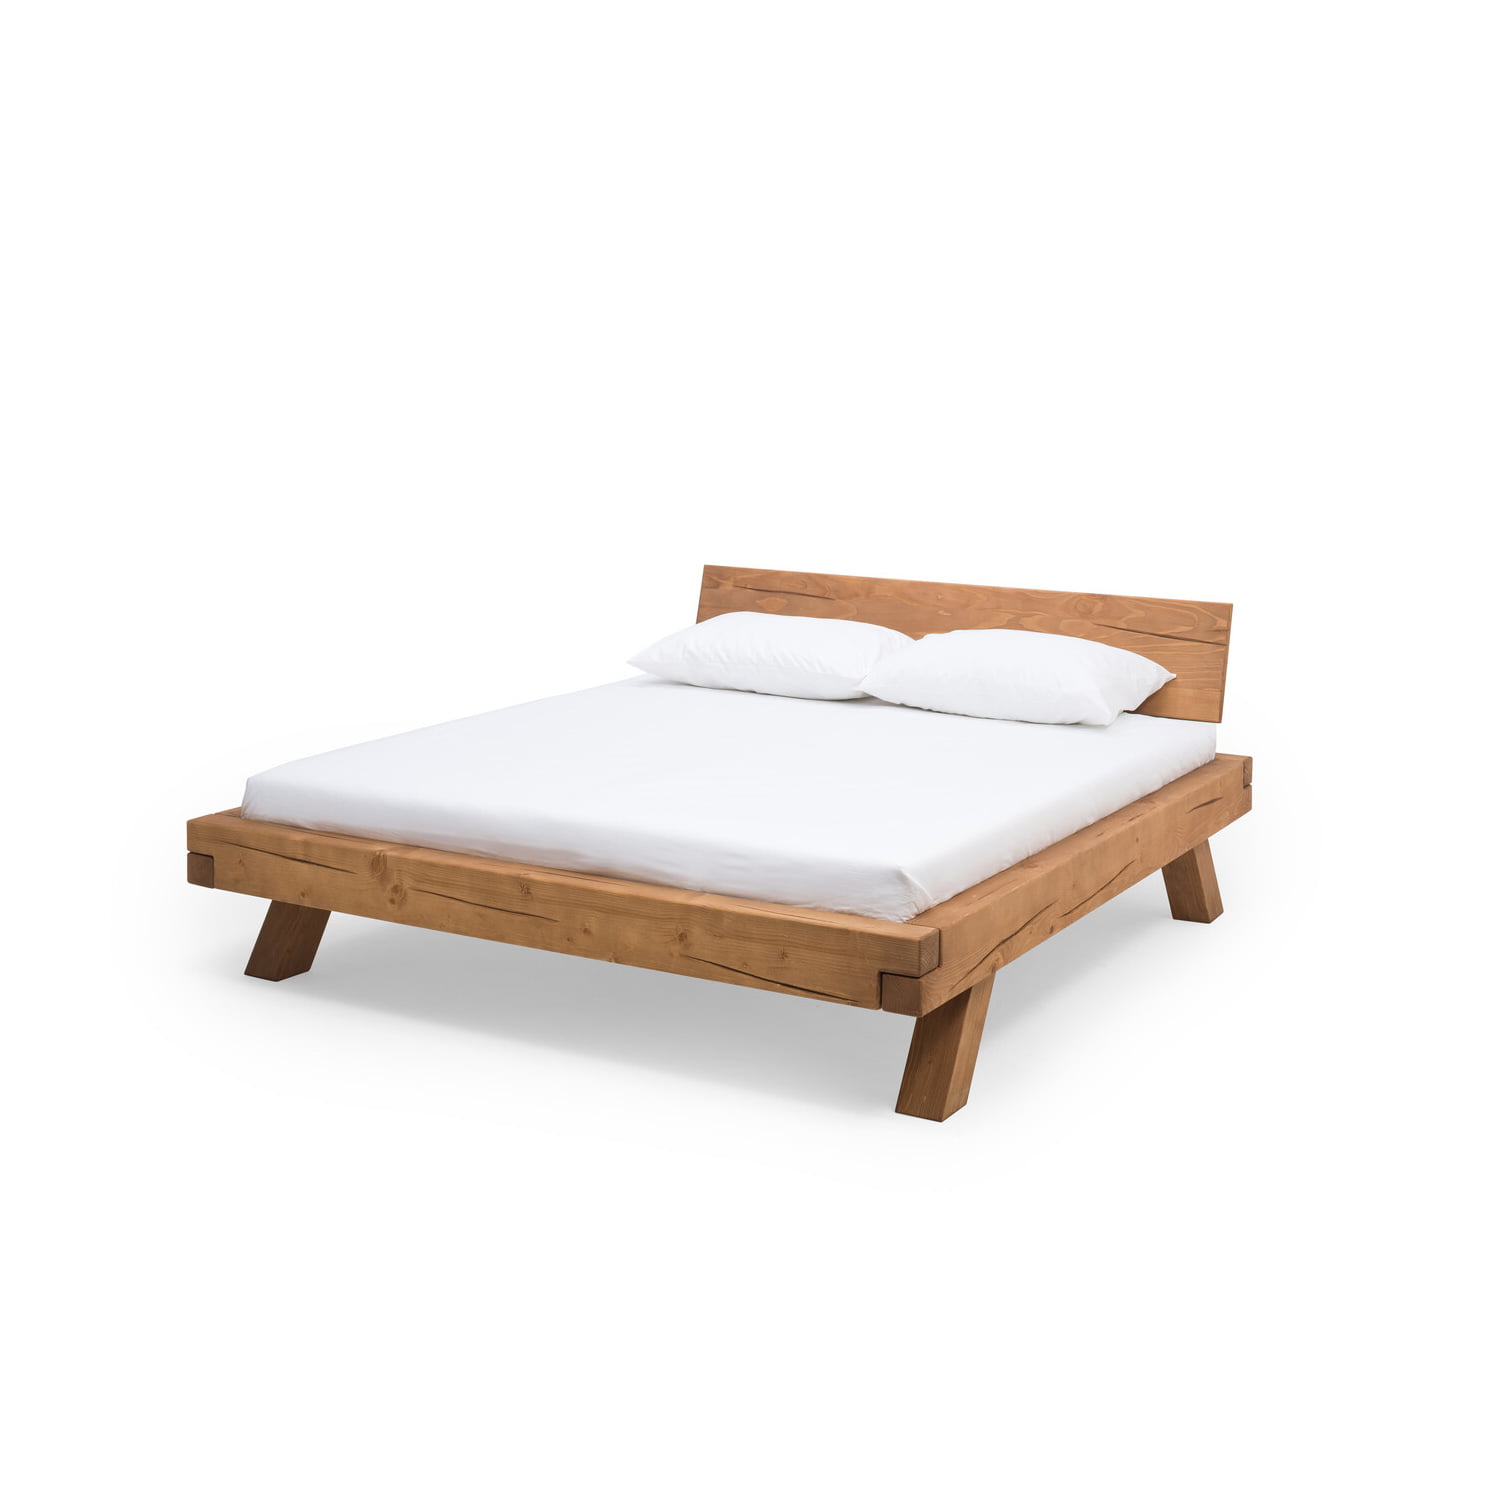 Bed Romeo Vurenhout 140x200cm